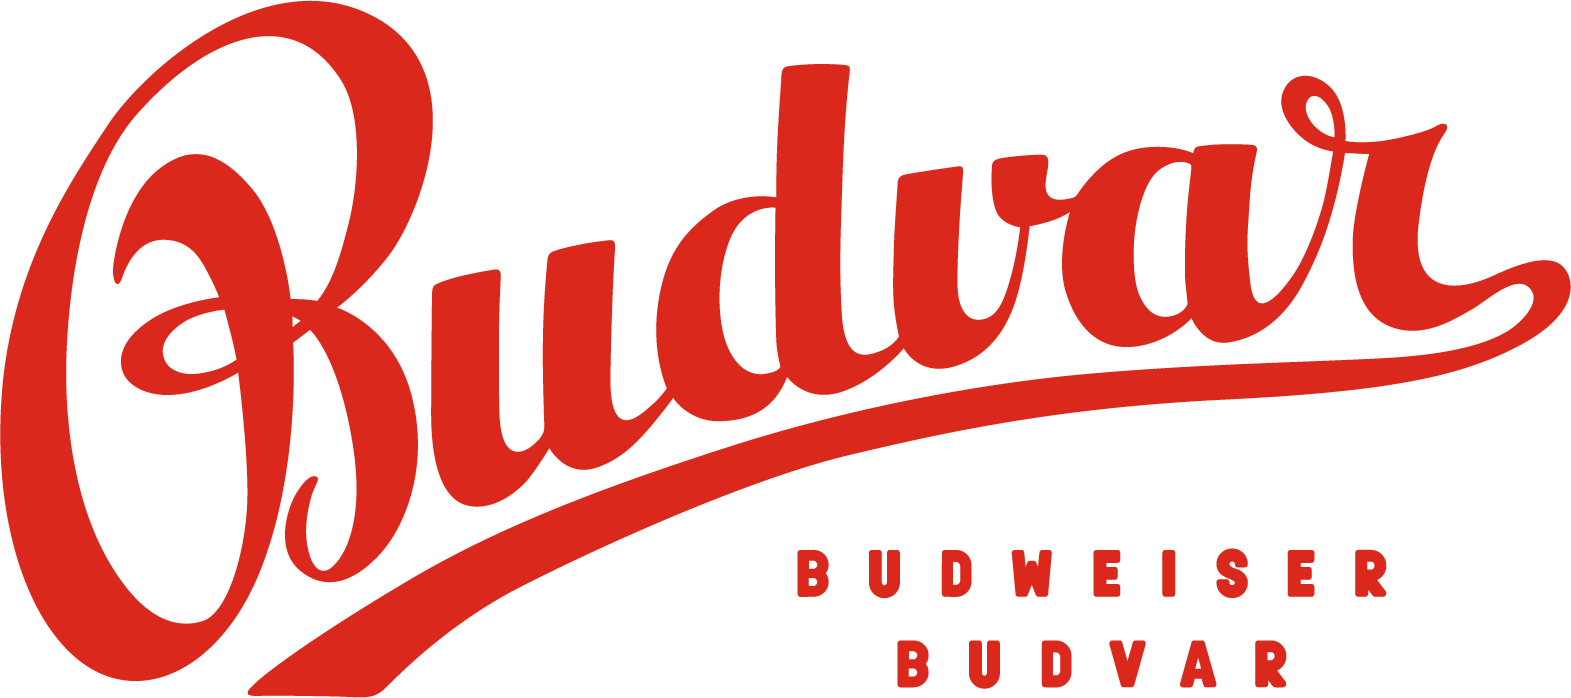 Budweiser Budvar Brewery (1571x698)